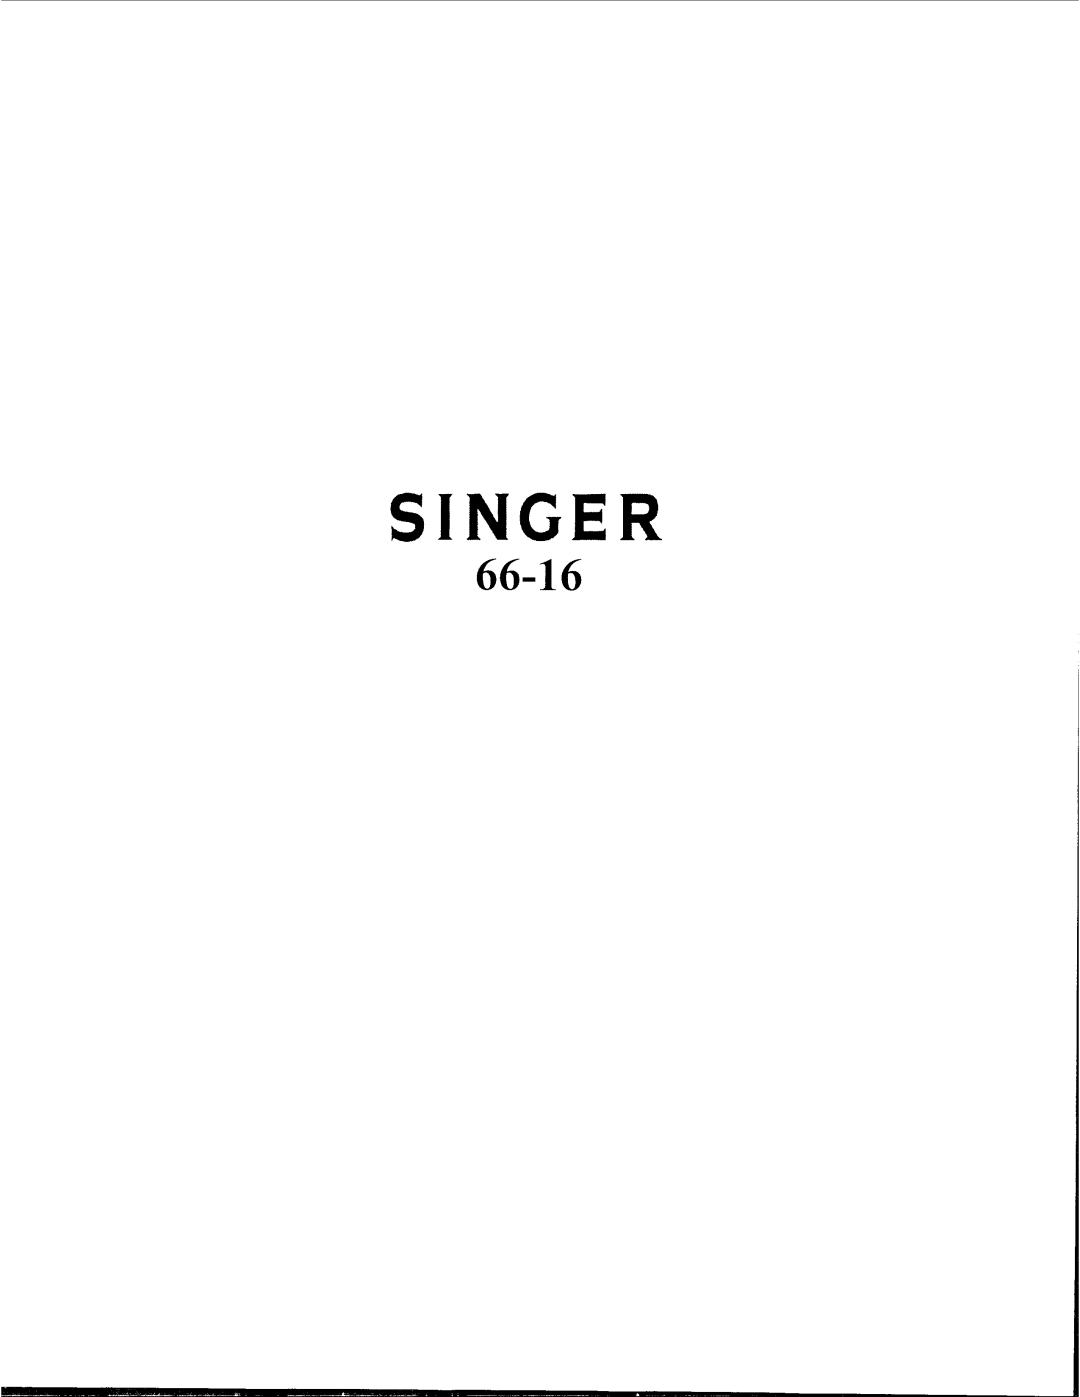 Singer 66-16 manual 